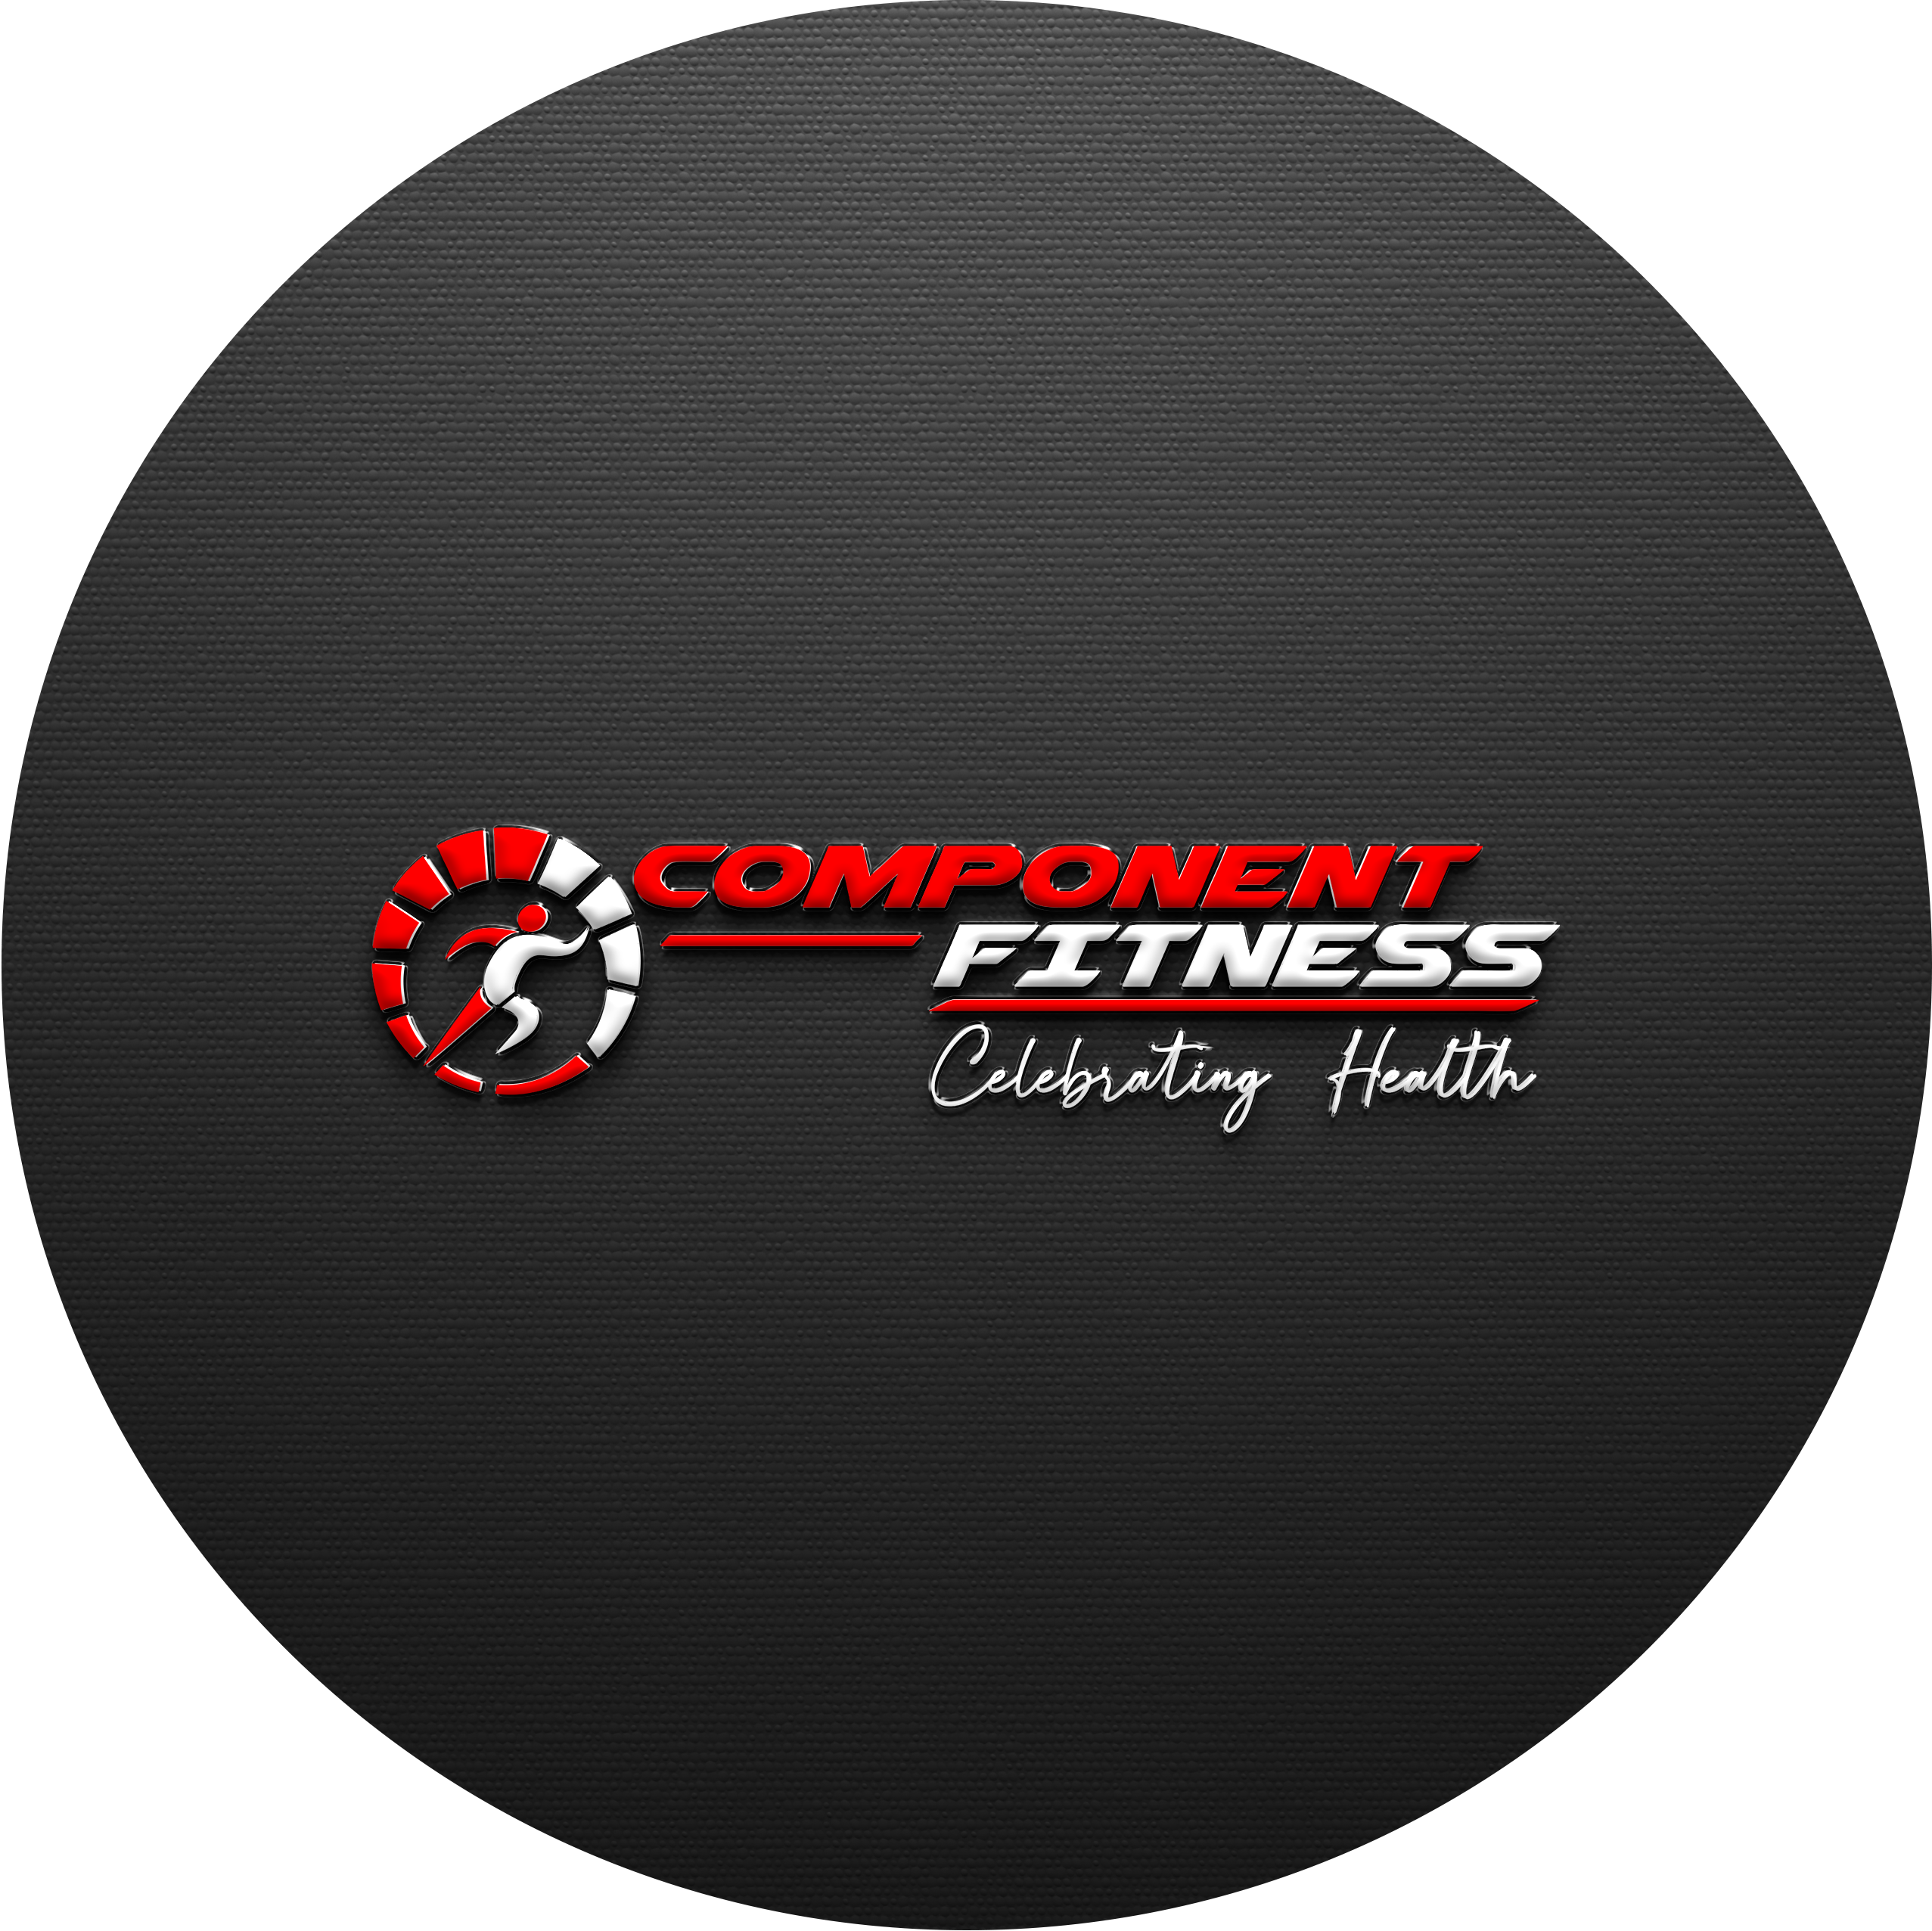 Component Fitness Gym|Salon|Active Life